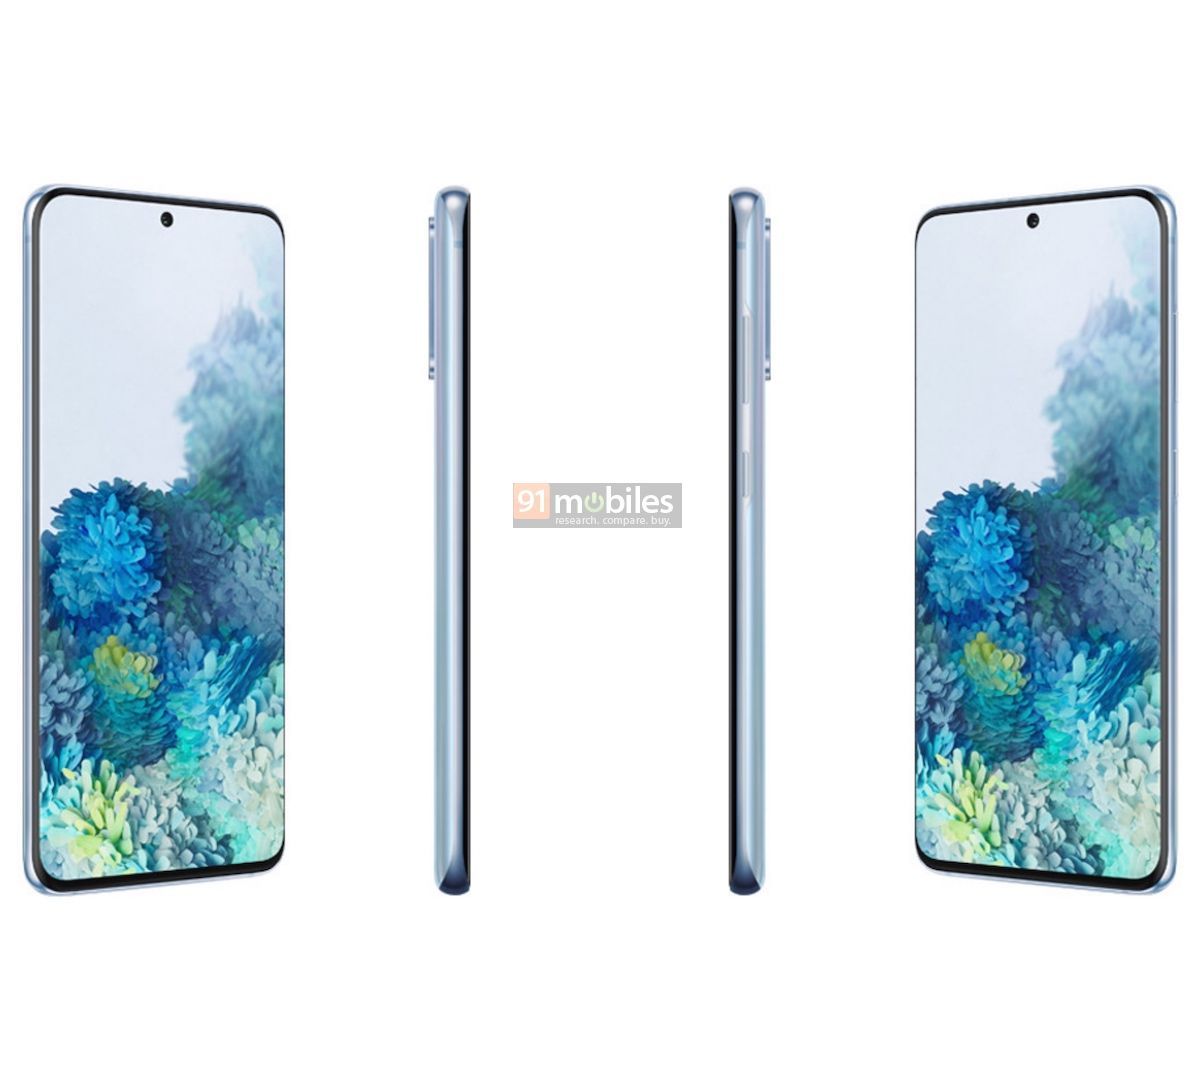 Samsung ‘officially’ confirms Galaxy S20 moniker for its next flagship thumbnail